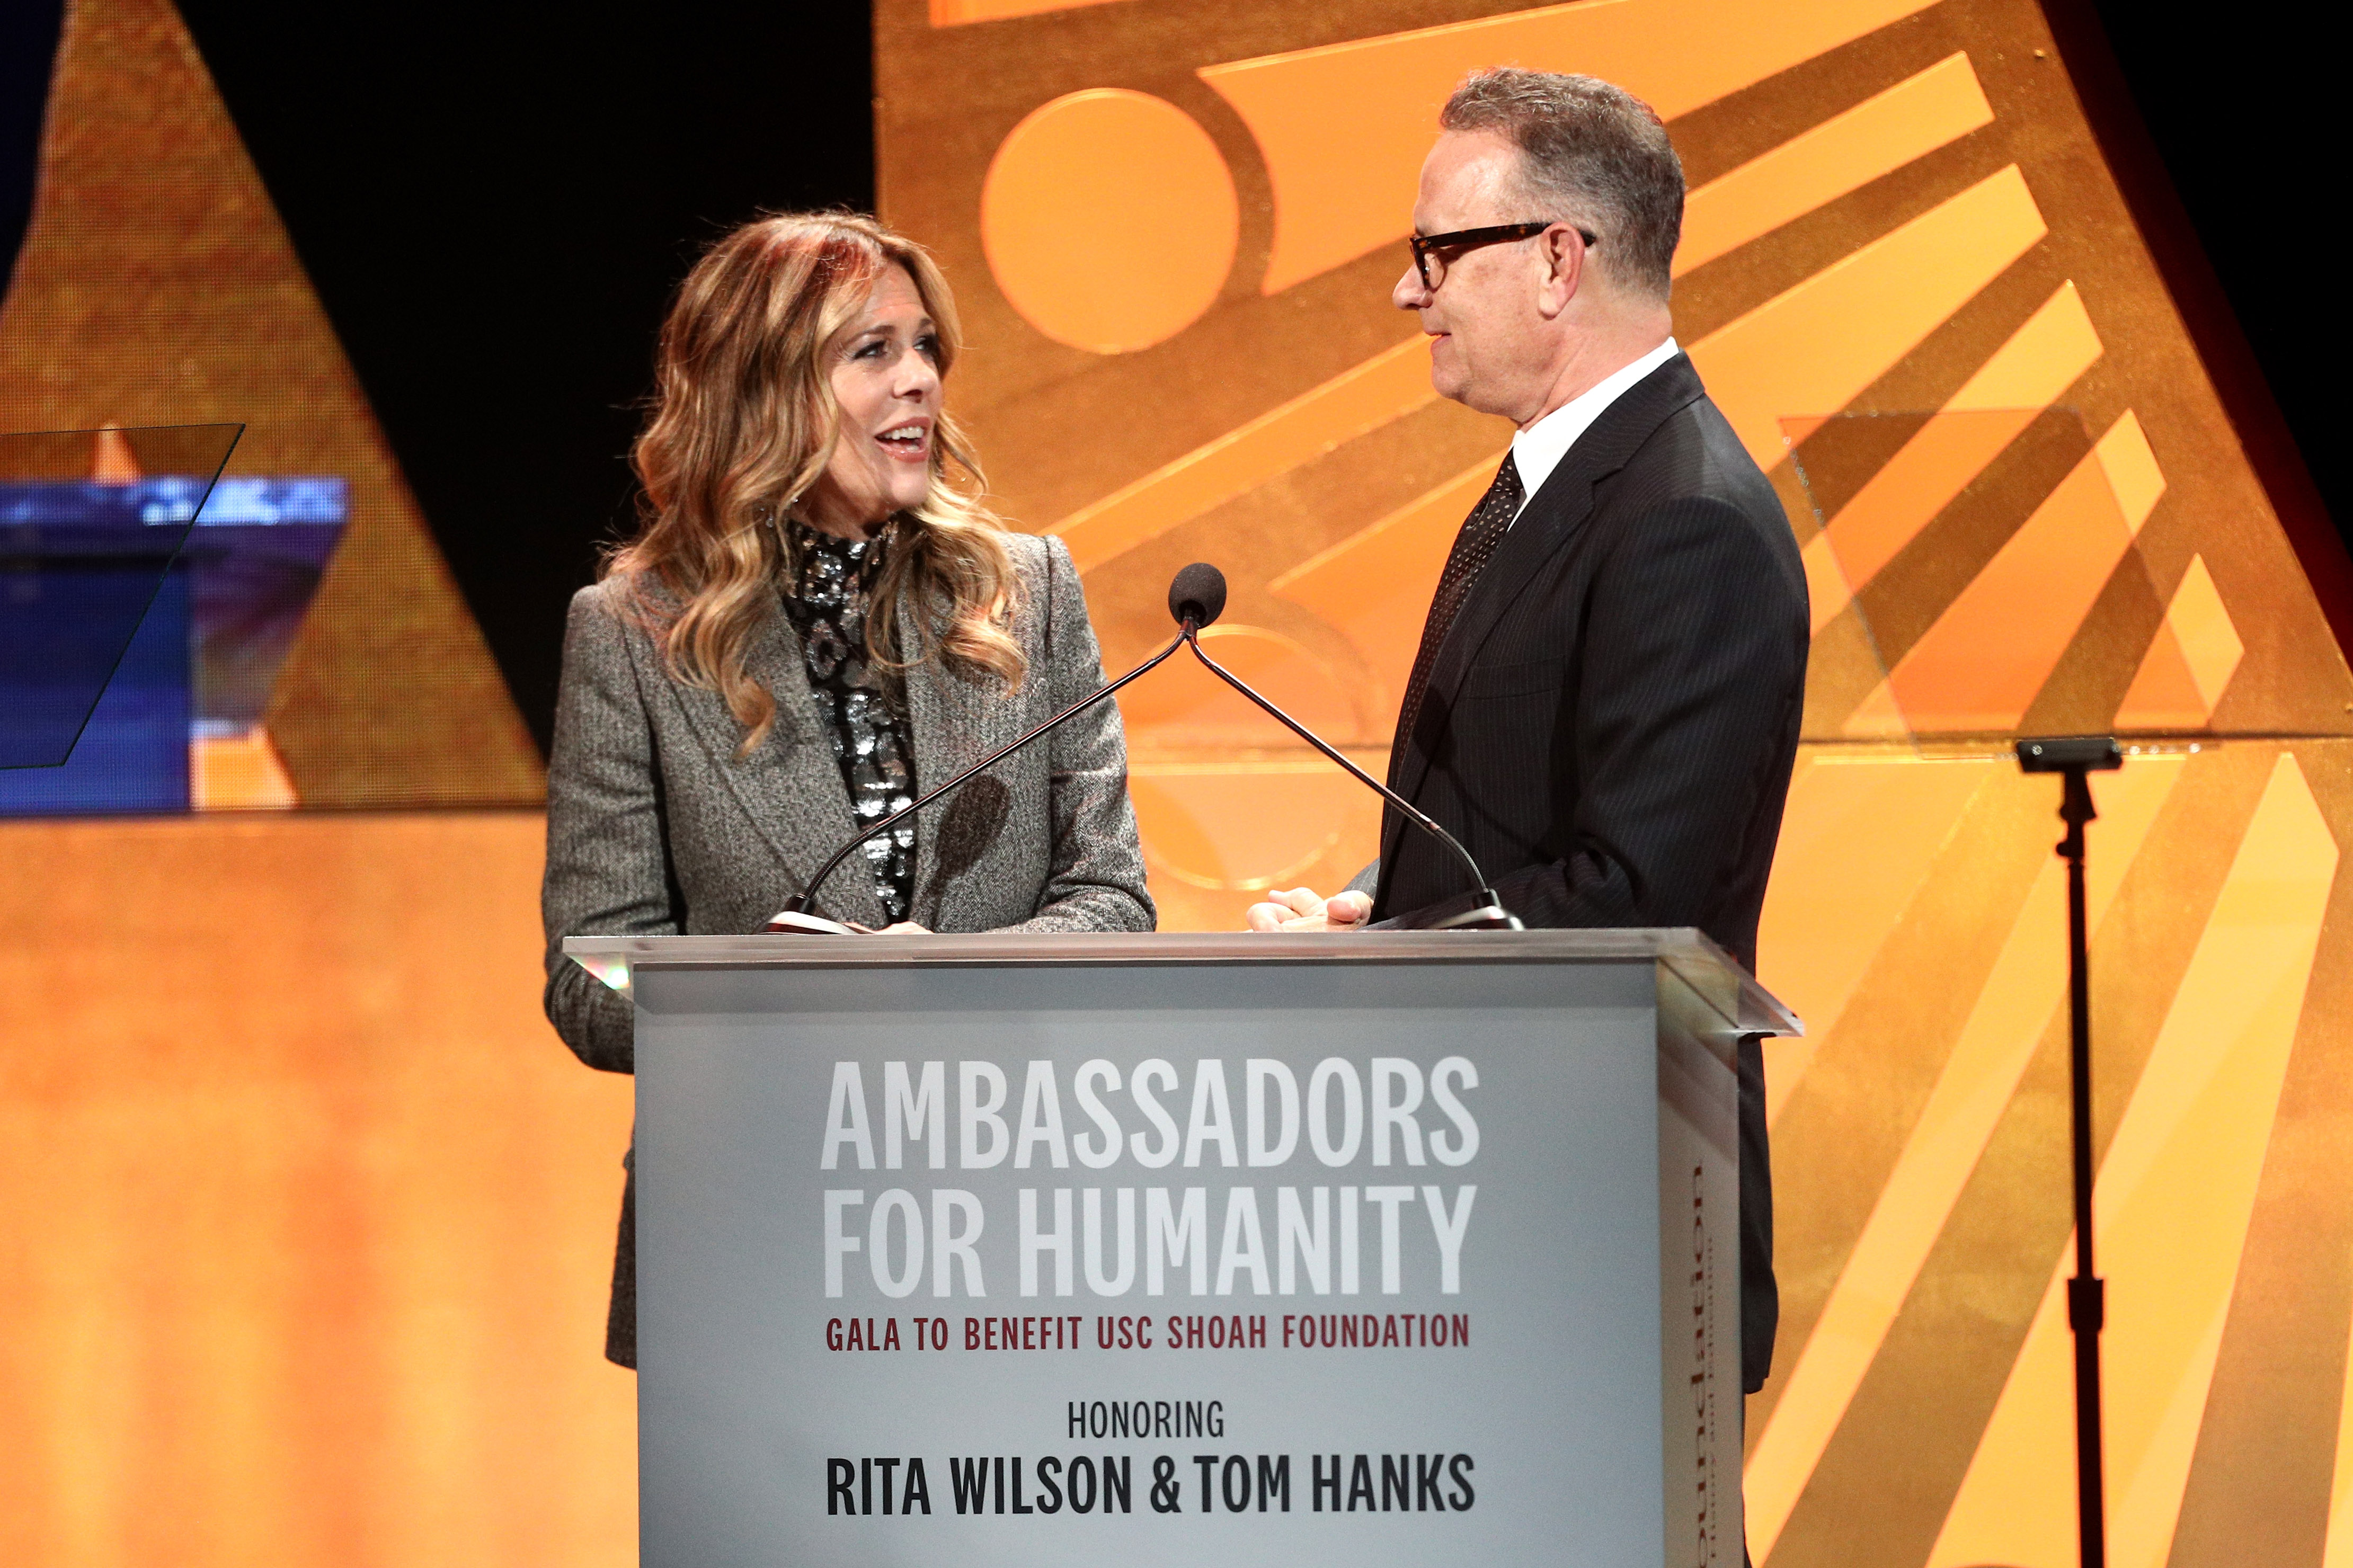 Rita Wilson and Tom Hanks speak at Ambassadors for Humanity